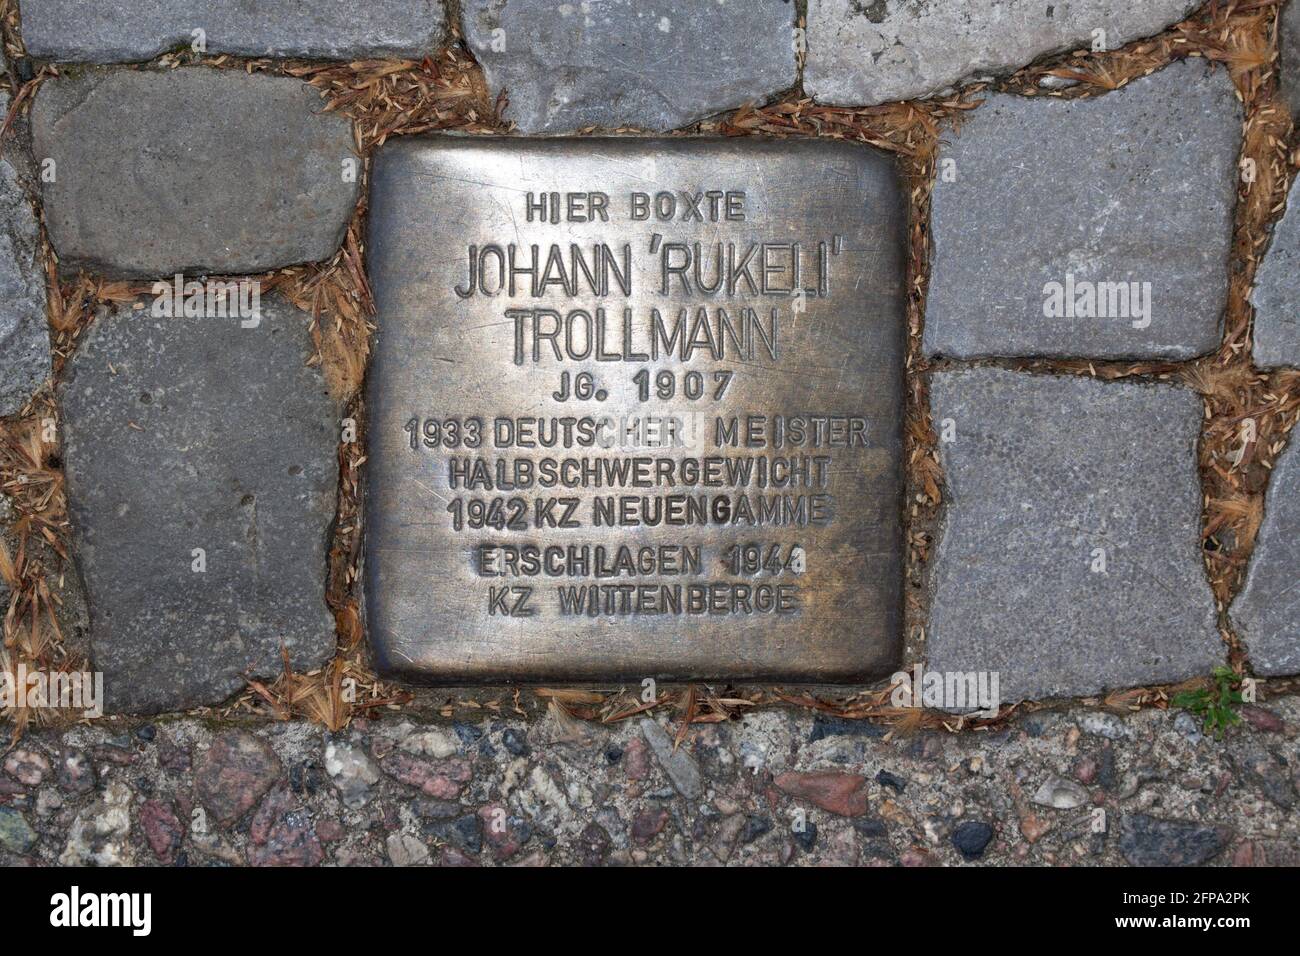 Johann Wilhelm 'Rukeli' Trollmann (born December 27, 1907 in Wilsche near Gifhorn, † 1944 in the camp Wittenberge of the Neuengamme concentration camp Stock Photo